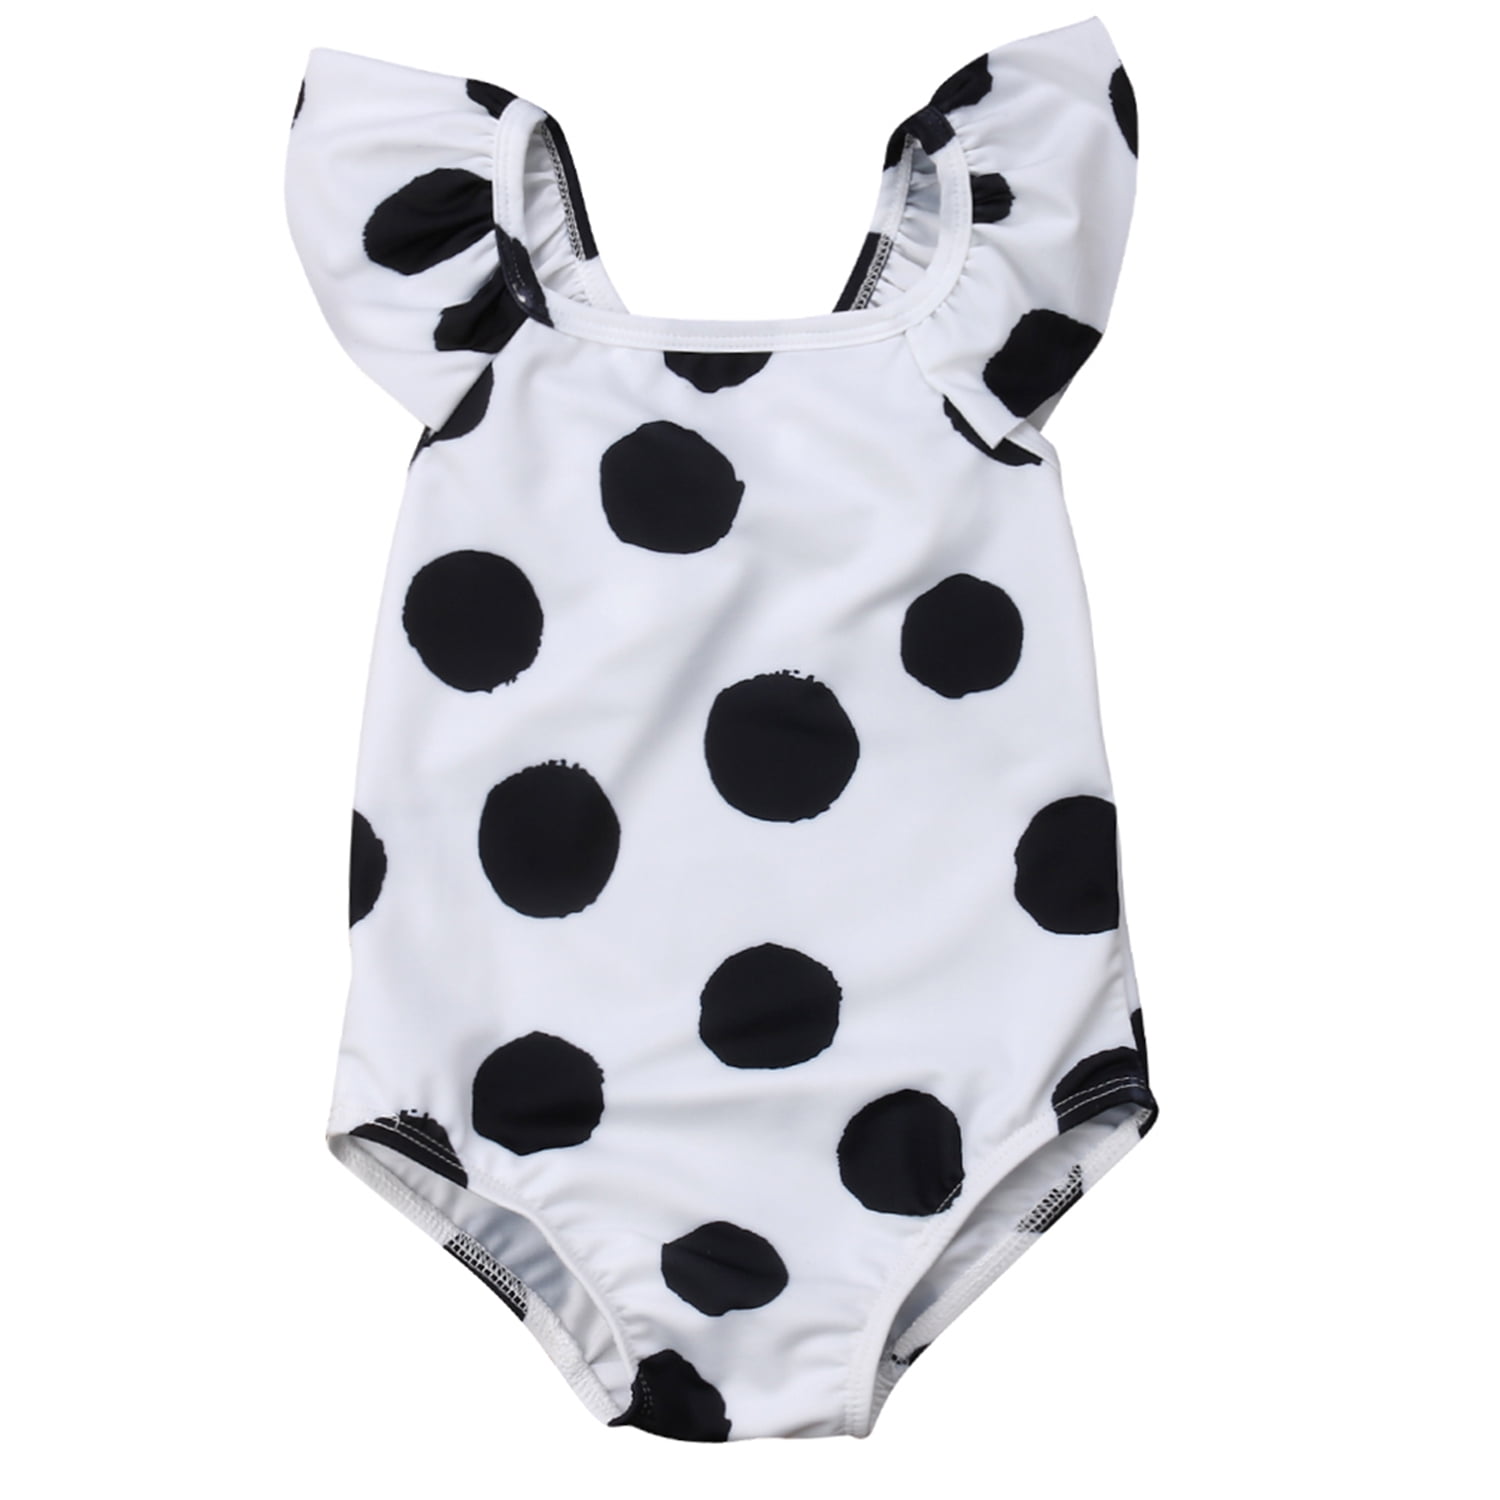 Toddler girls black white polka dot swimsuit bikini swimwear beachwear one piece 